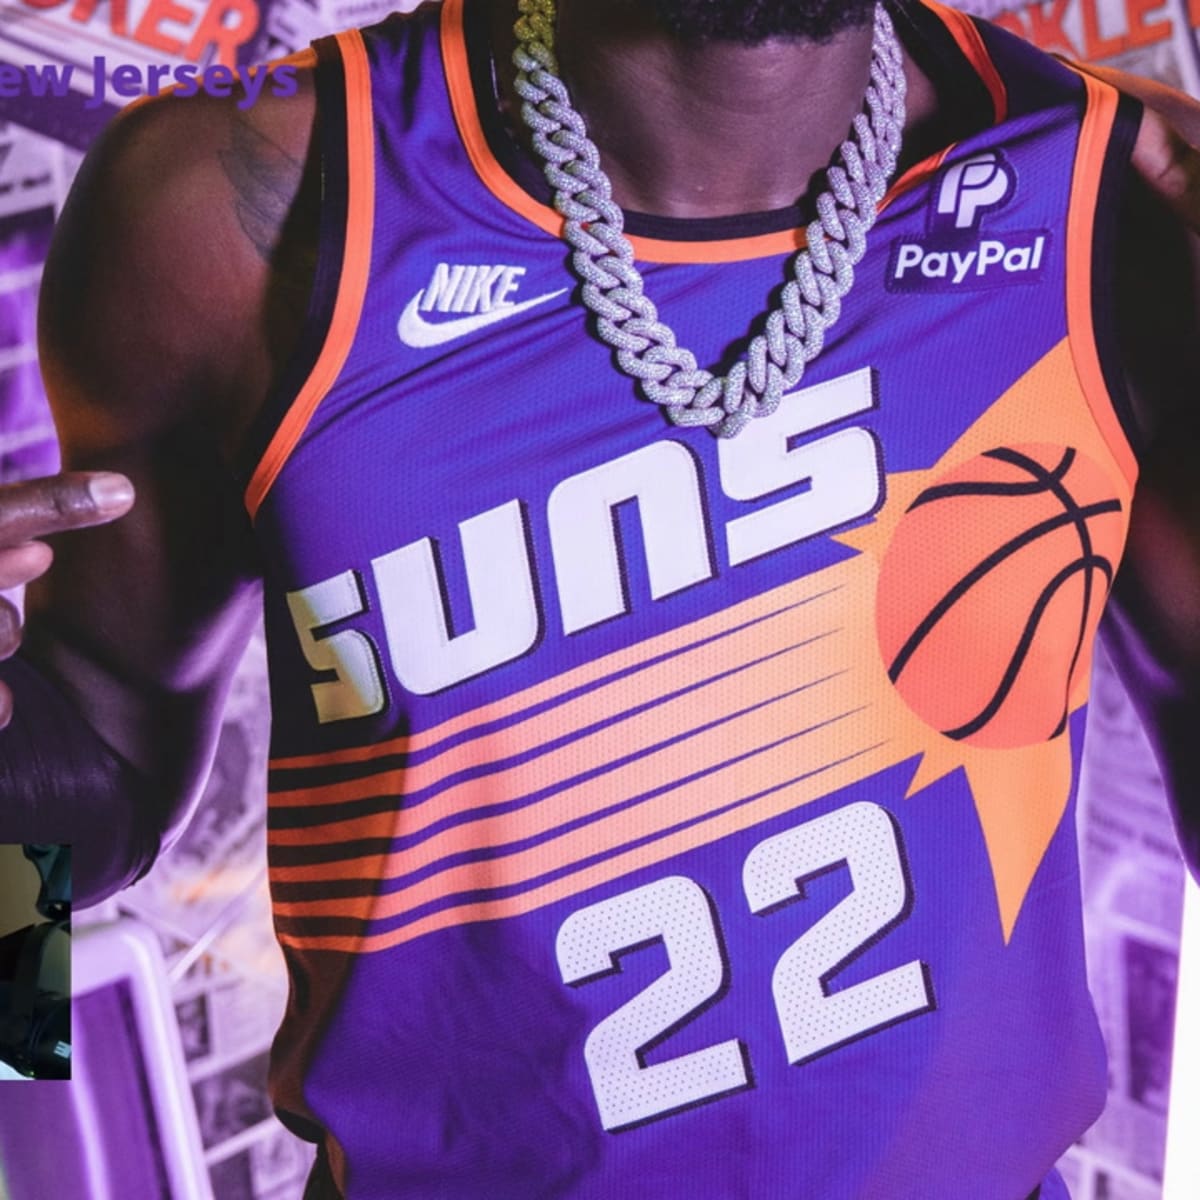 Phoenix Suns Throwback Jerseys, Vintage NBA Gear